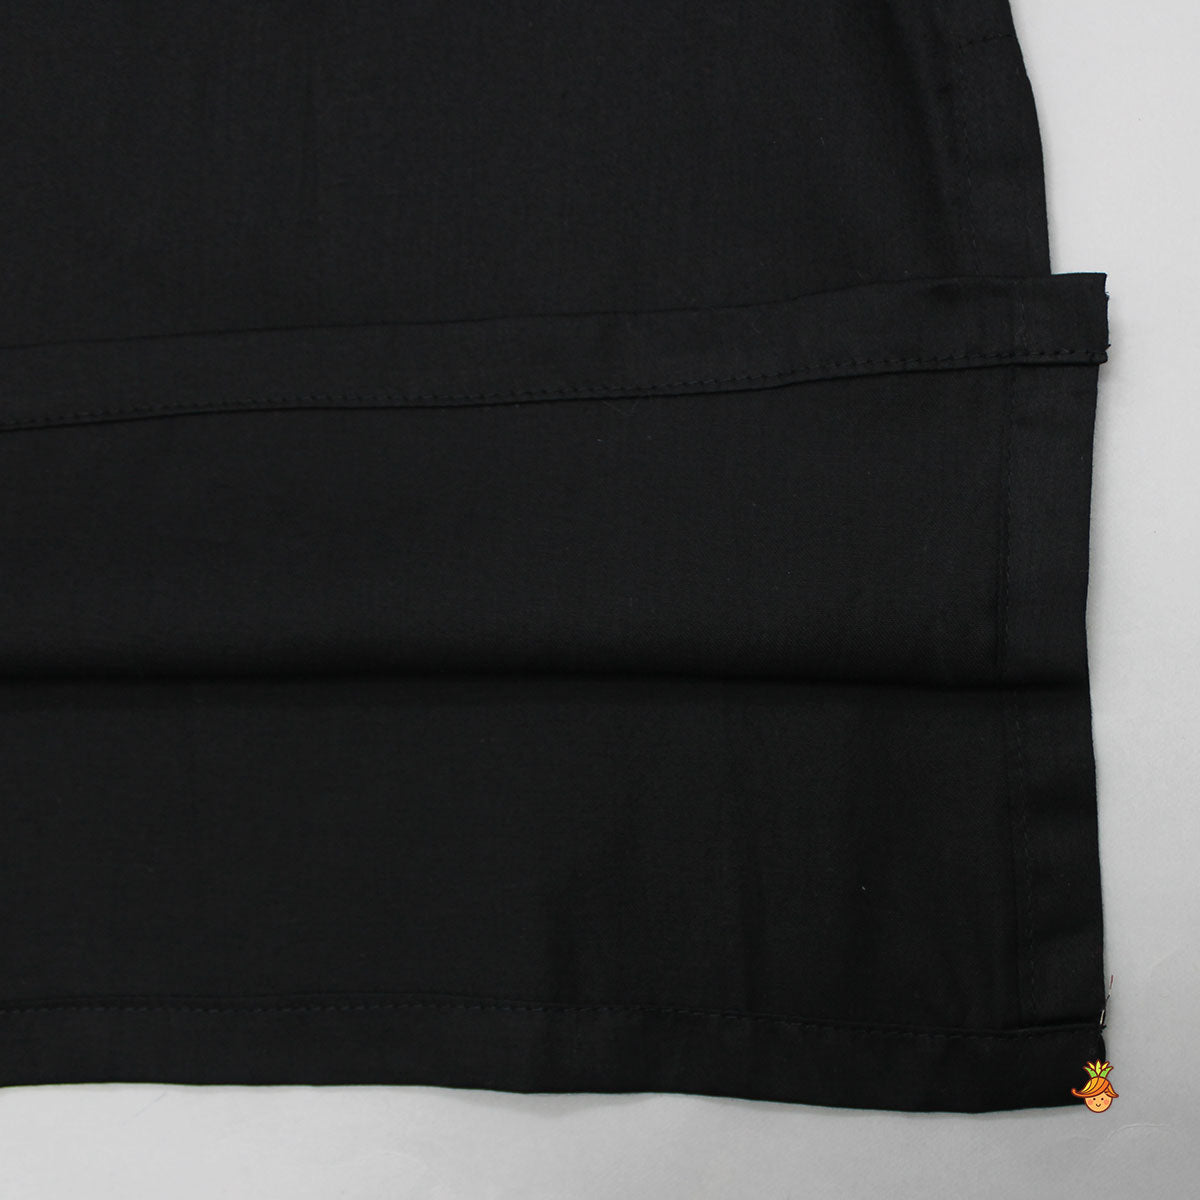 Black Silk Ethnic Kurta With Embroidered Jacket Patch Pocket And Pyjama